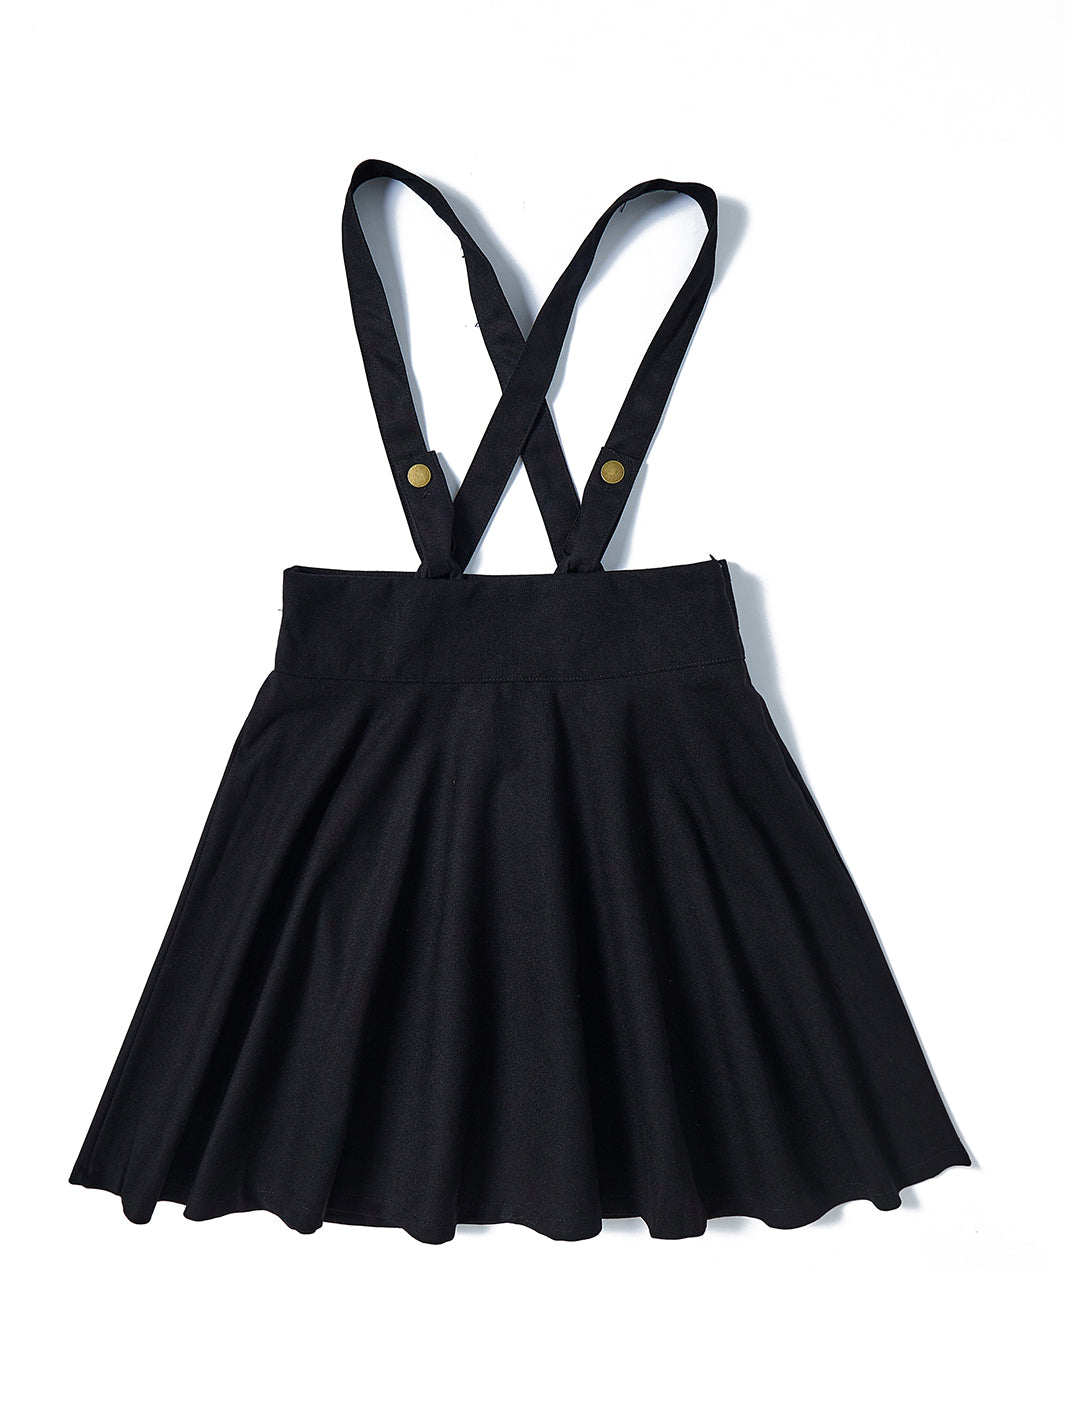 Circle Suspender Skirt - Black